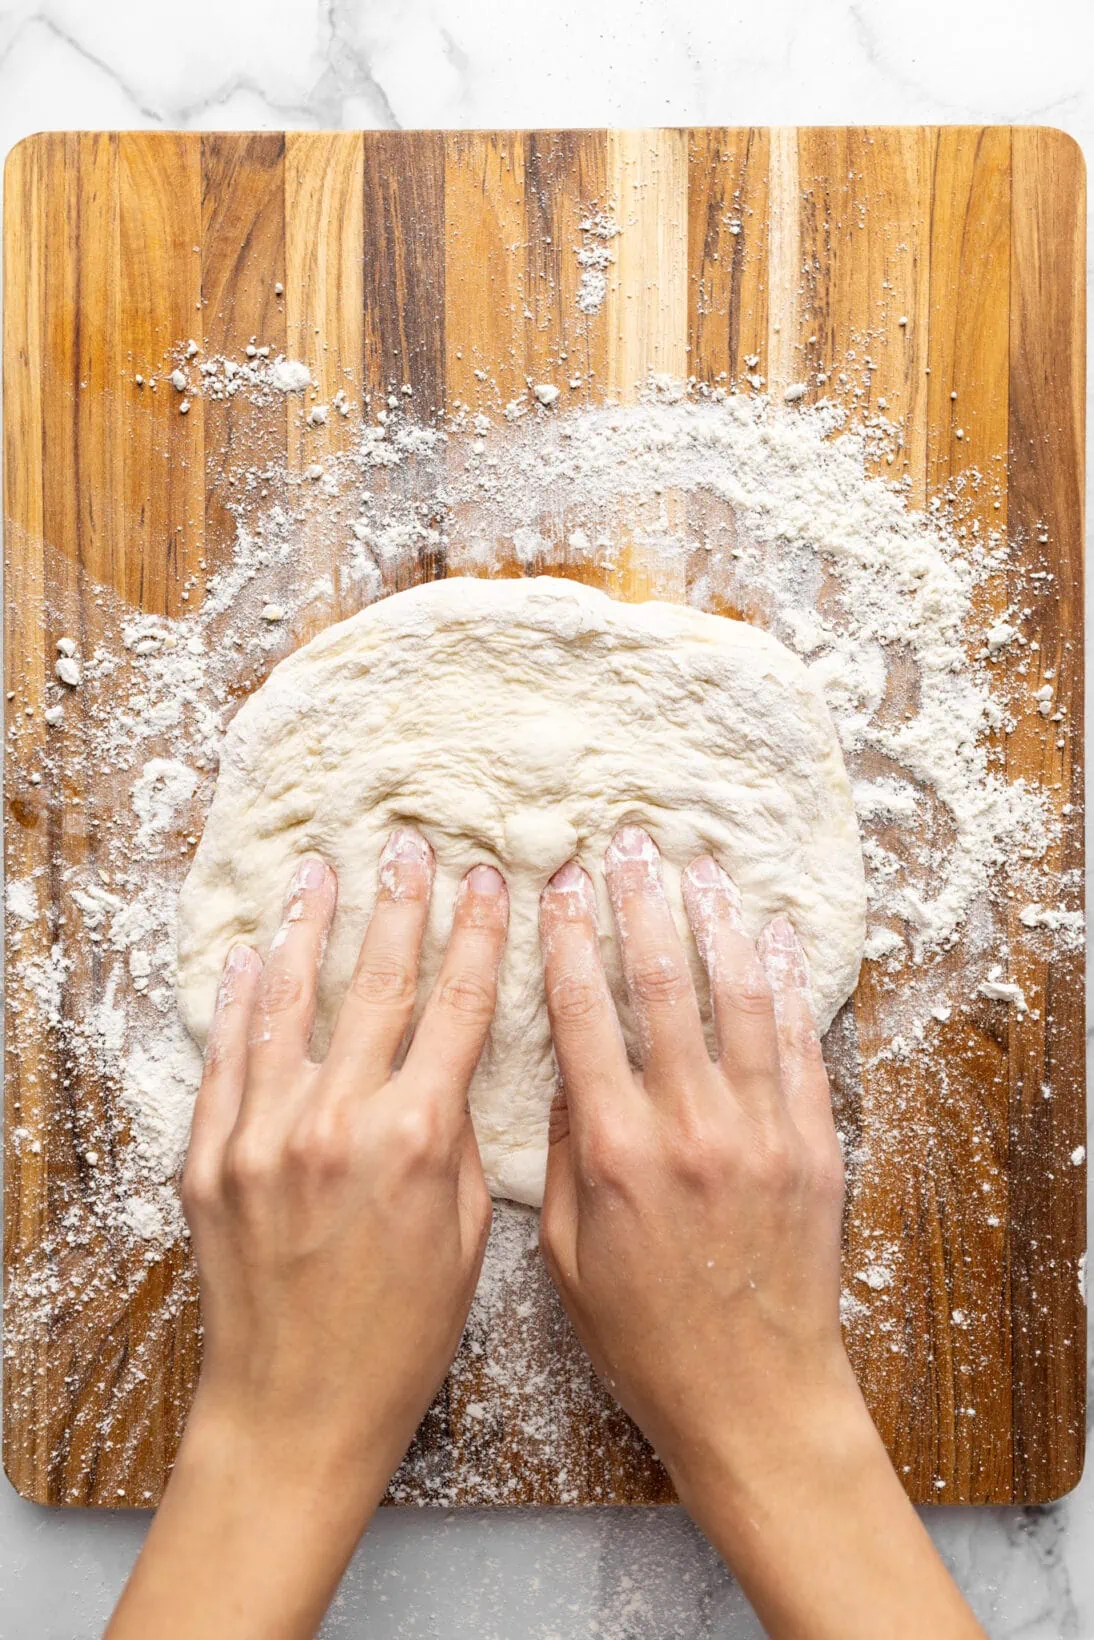 dimpling the dough